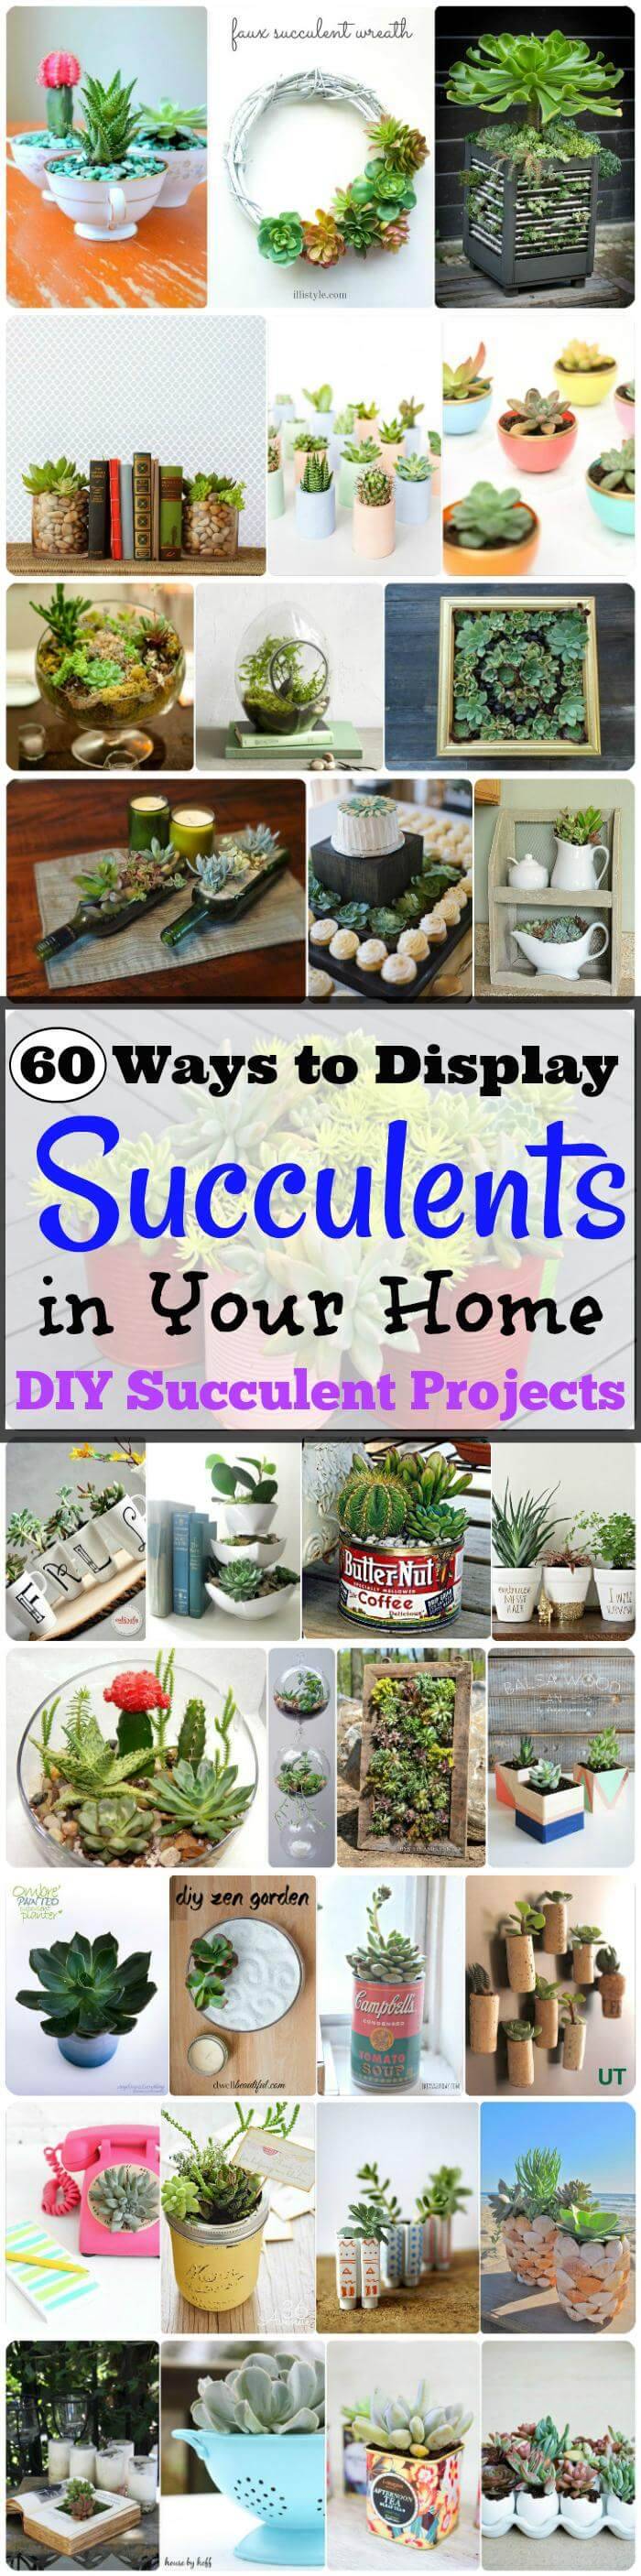 DIY Succulent Projects